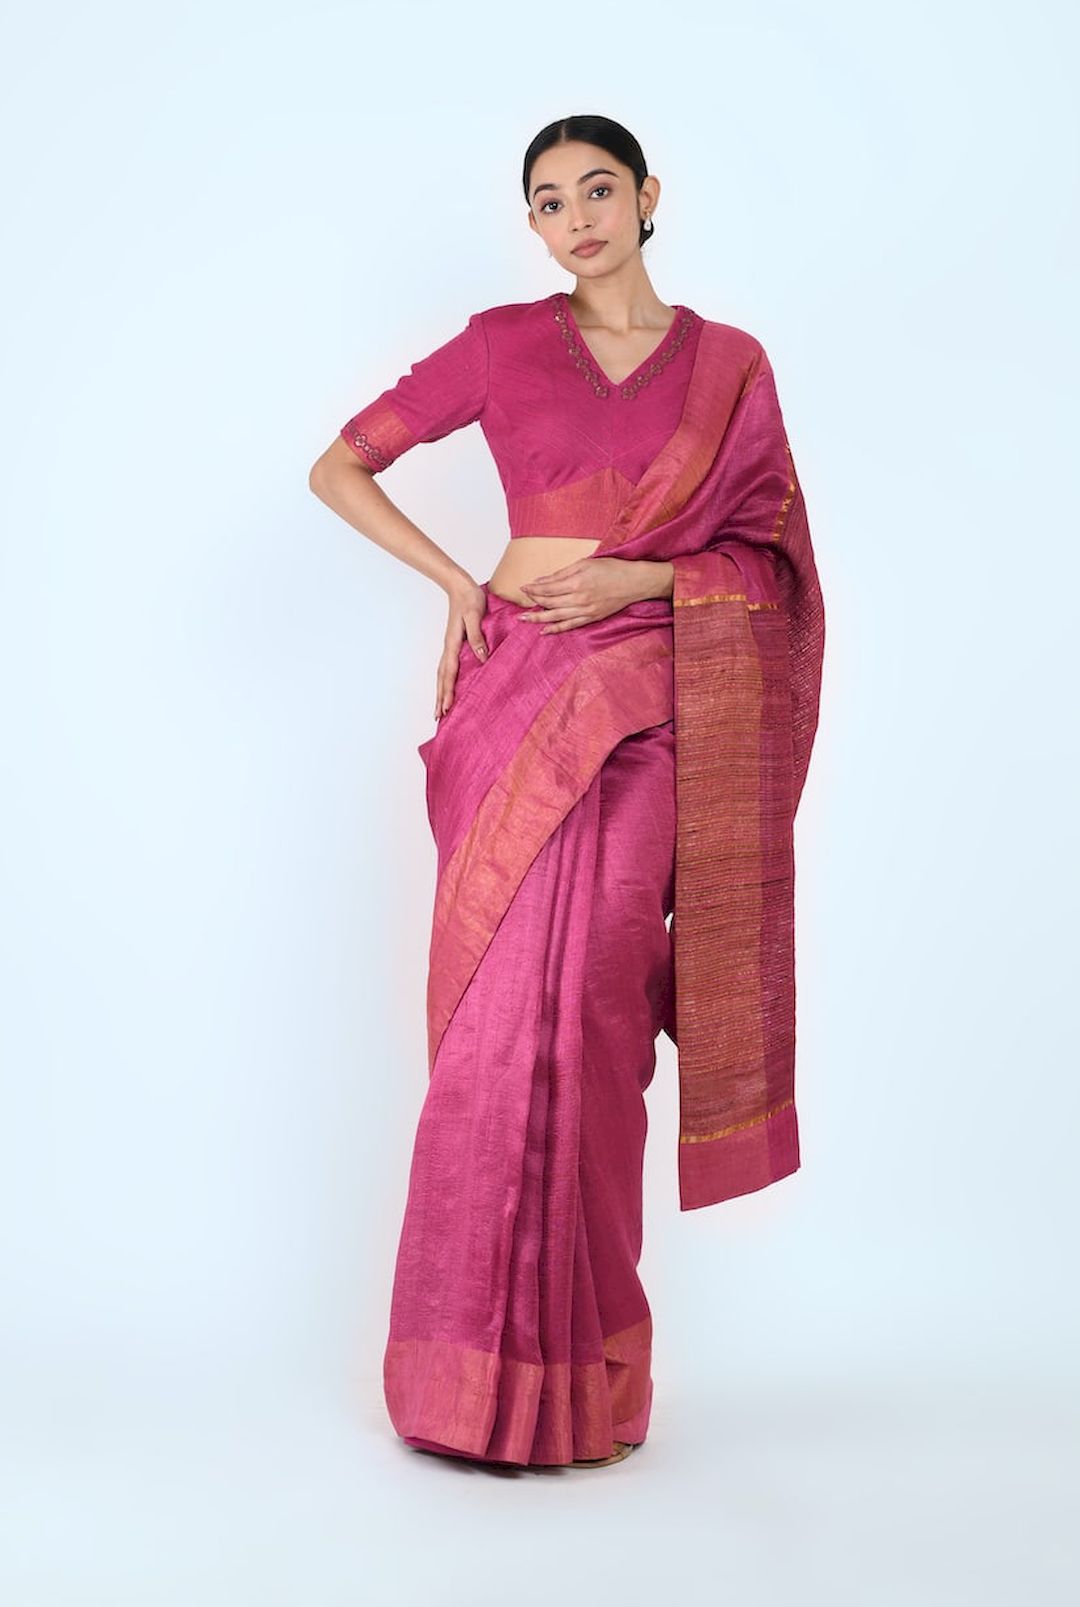 Raw Silk Sari With Blouse - Prashant Chouhan